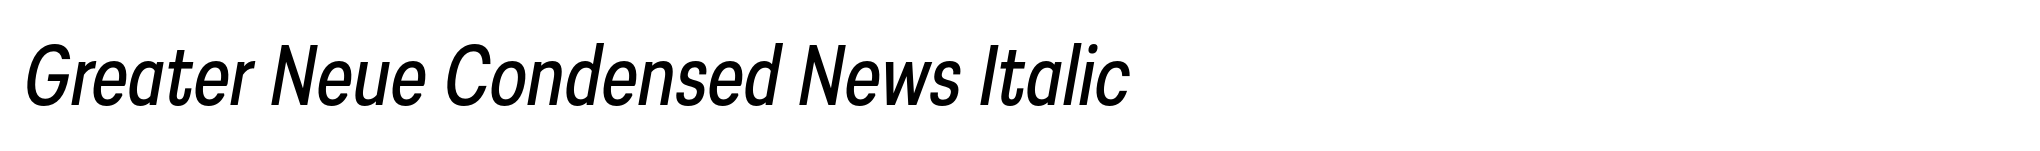 Greater Neue Condensed News Italic image